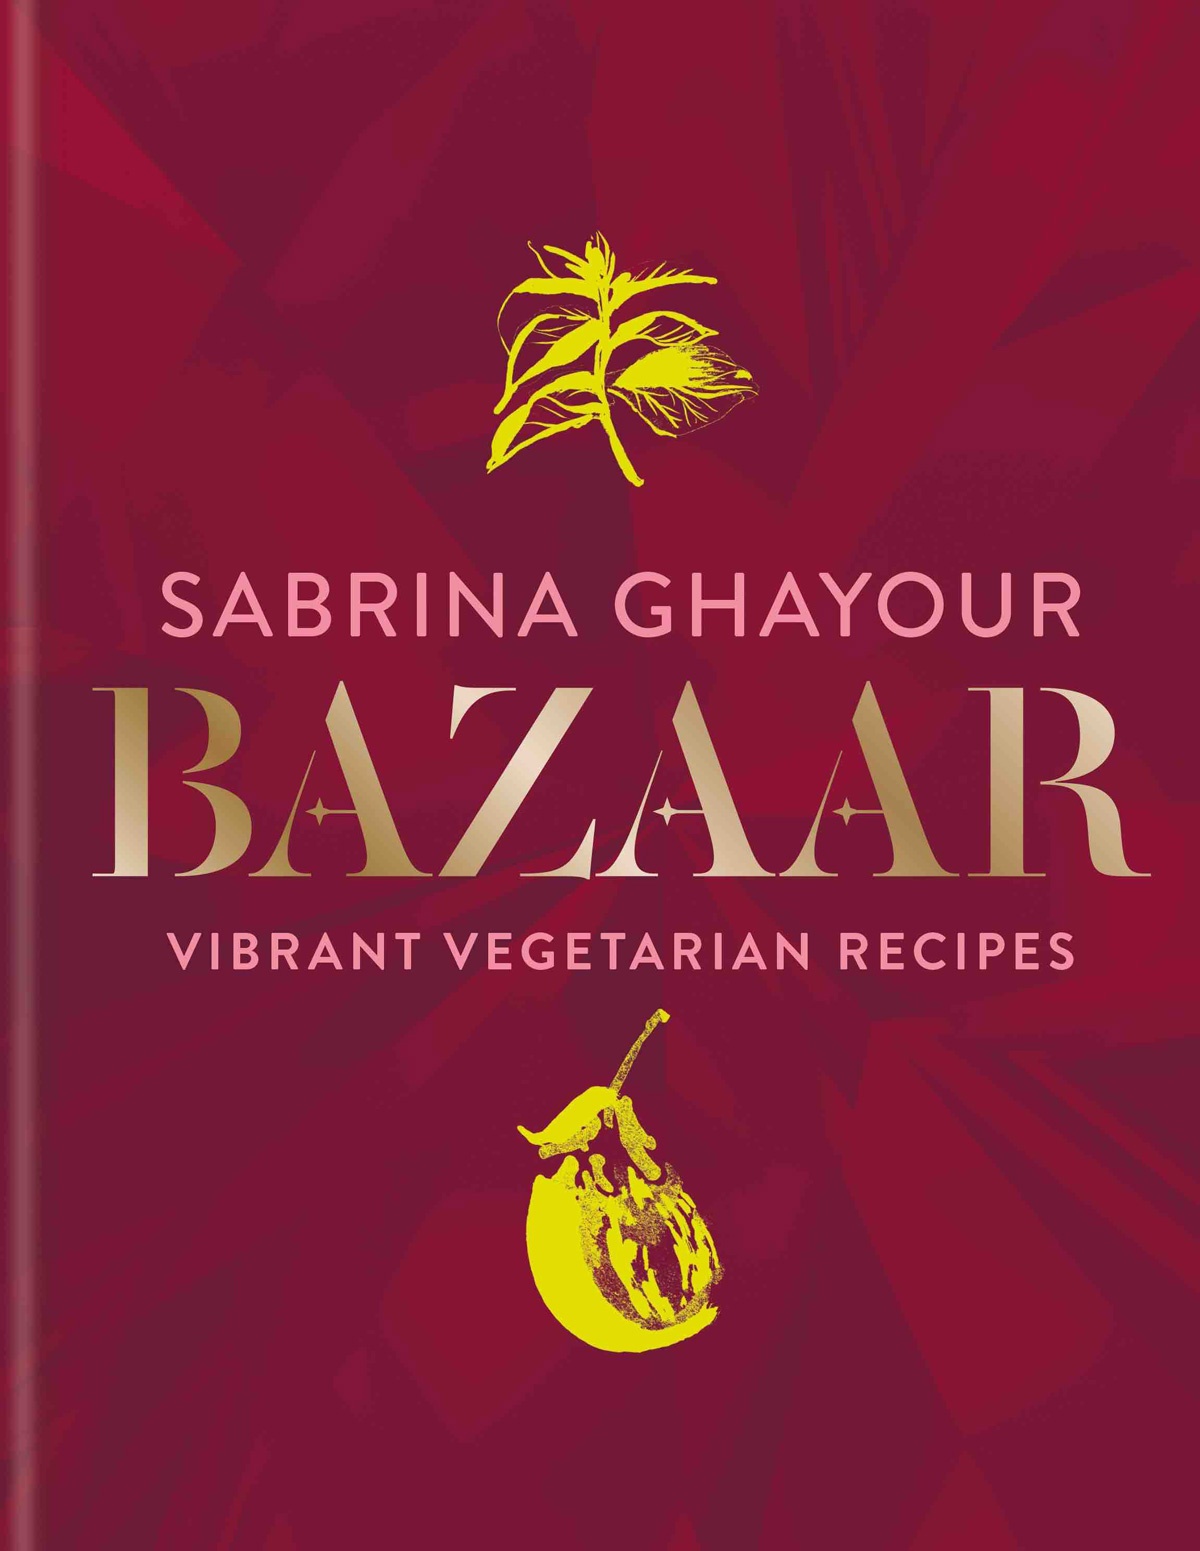 Book cover of Bazaar by Sabrina Ghayour